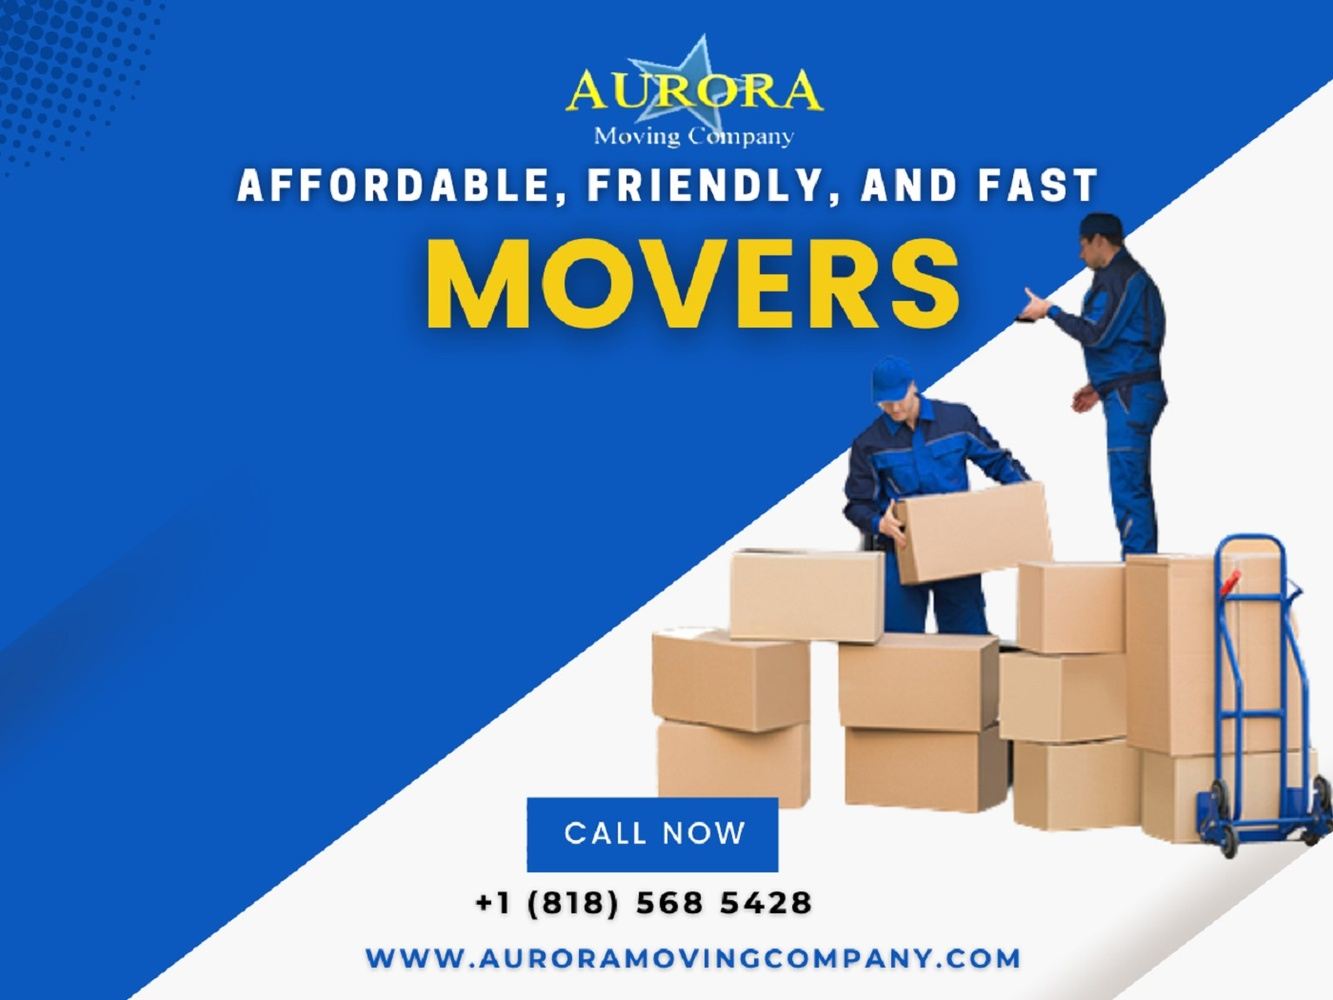 Aurora Moving Company